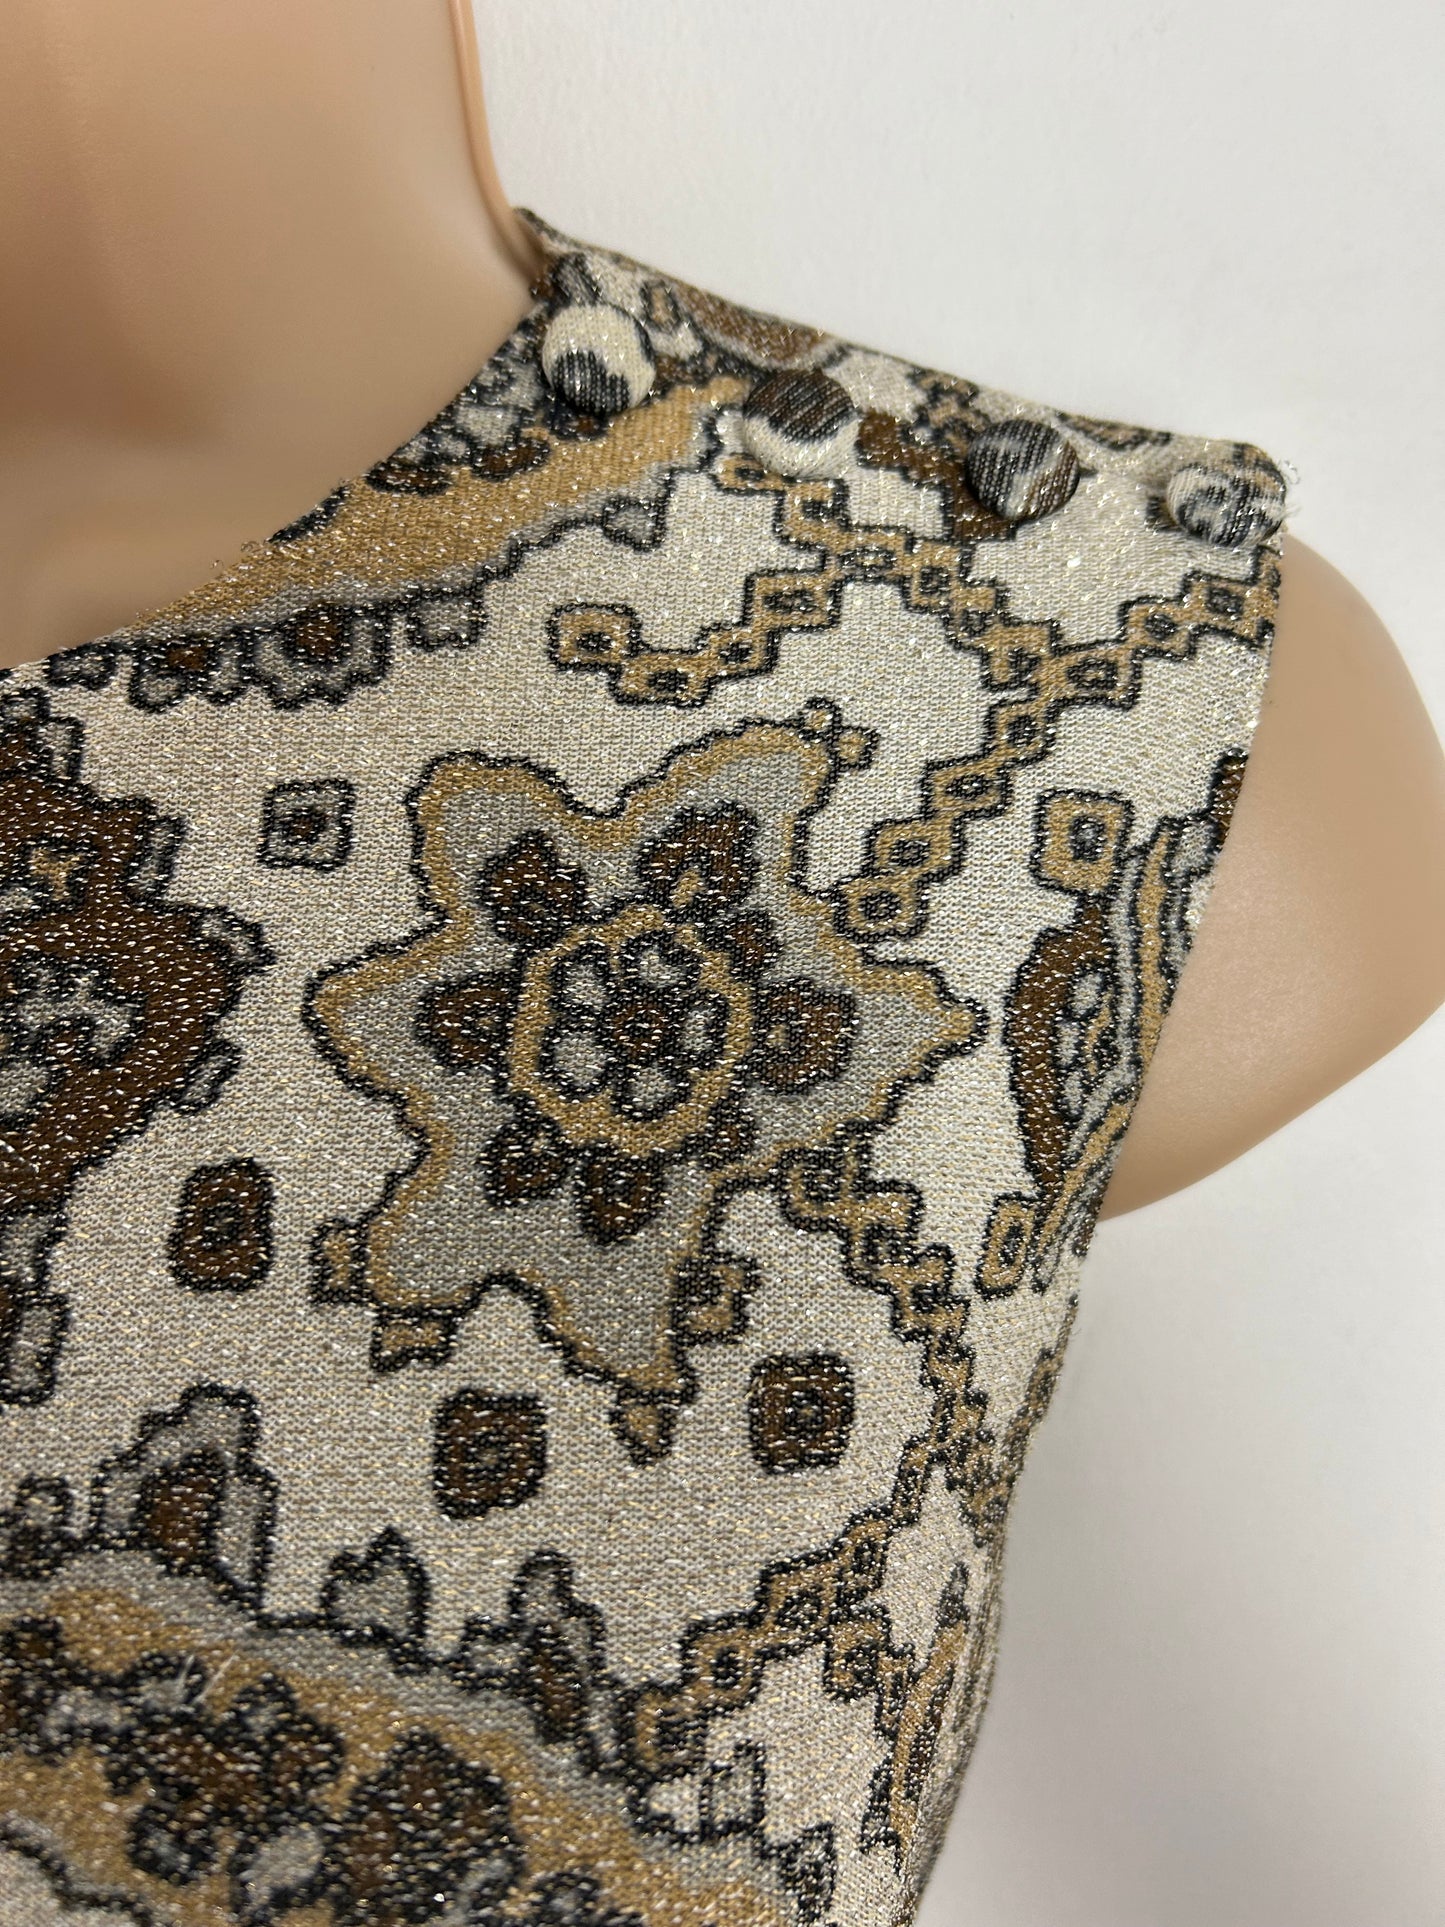 Vintage 1960s REMBRANDT UK Size 10 Beige Sand Brown & Metallic Abstract Floral Lurex Belted Mod Occasion Dress